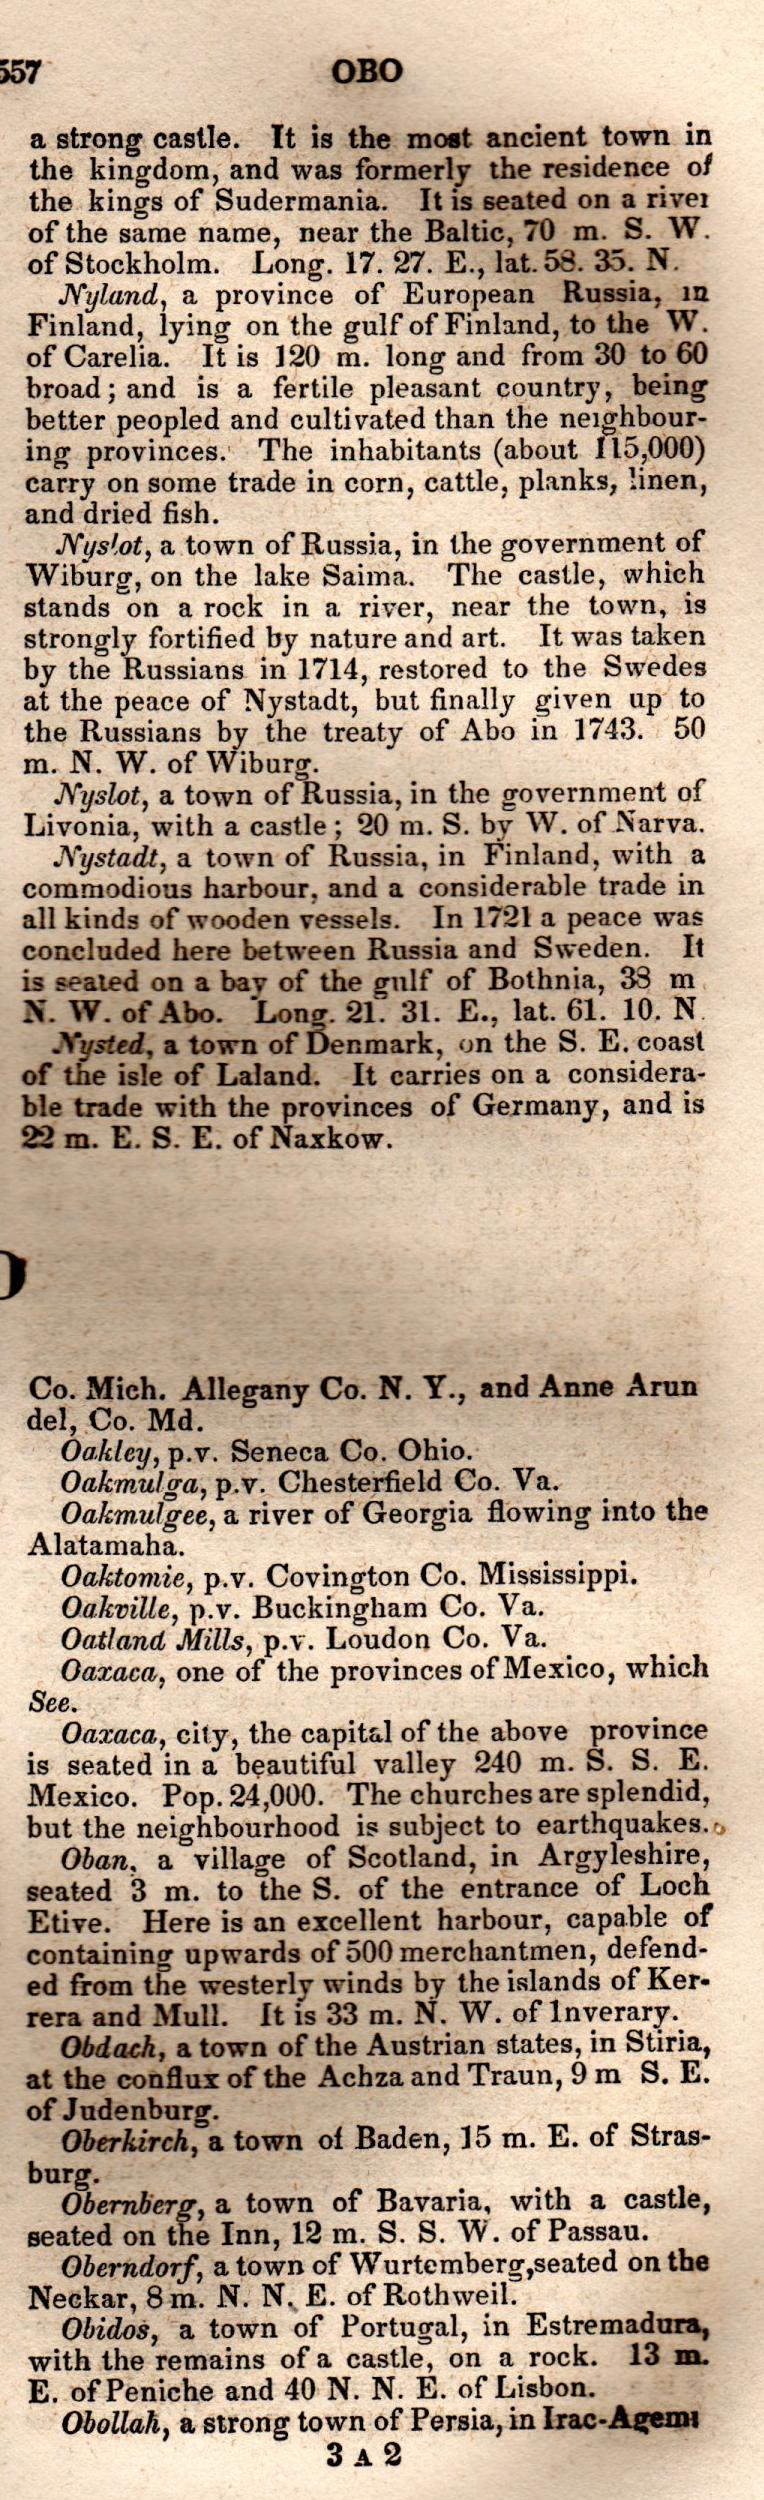 Brookes’ Universal Gazetteer (1850), Page 557 Right Column